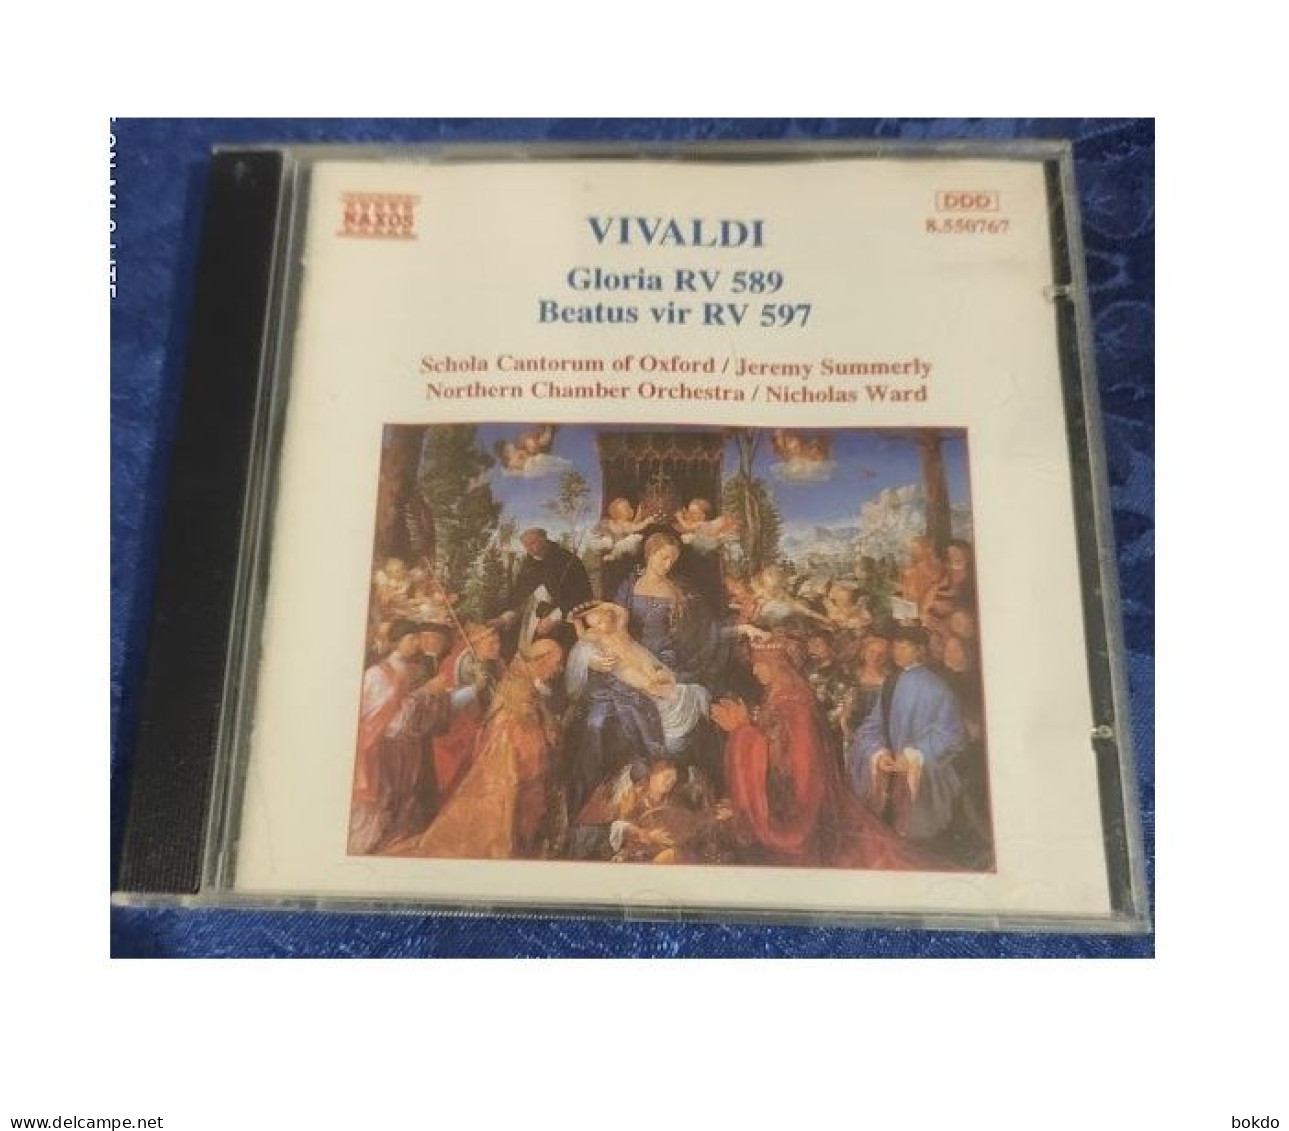 VIVALDI - Gloria RV 589 - Beatus RV 597 - Clásica